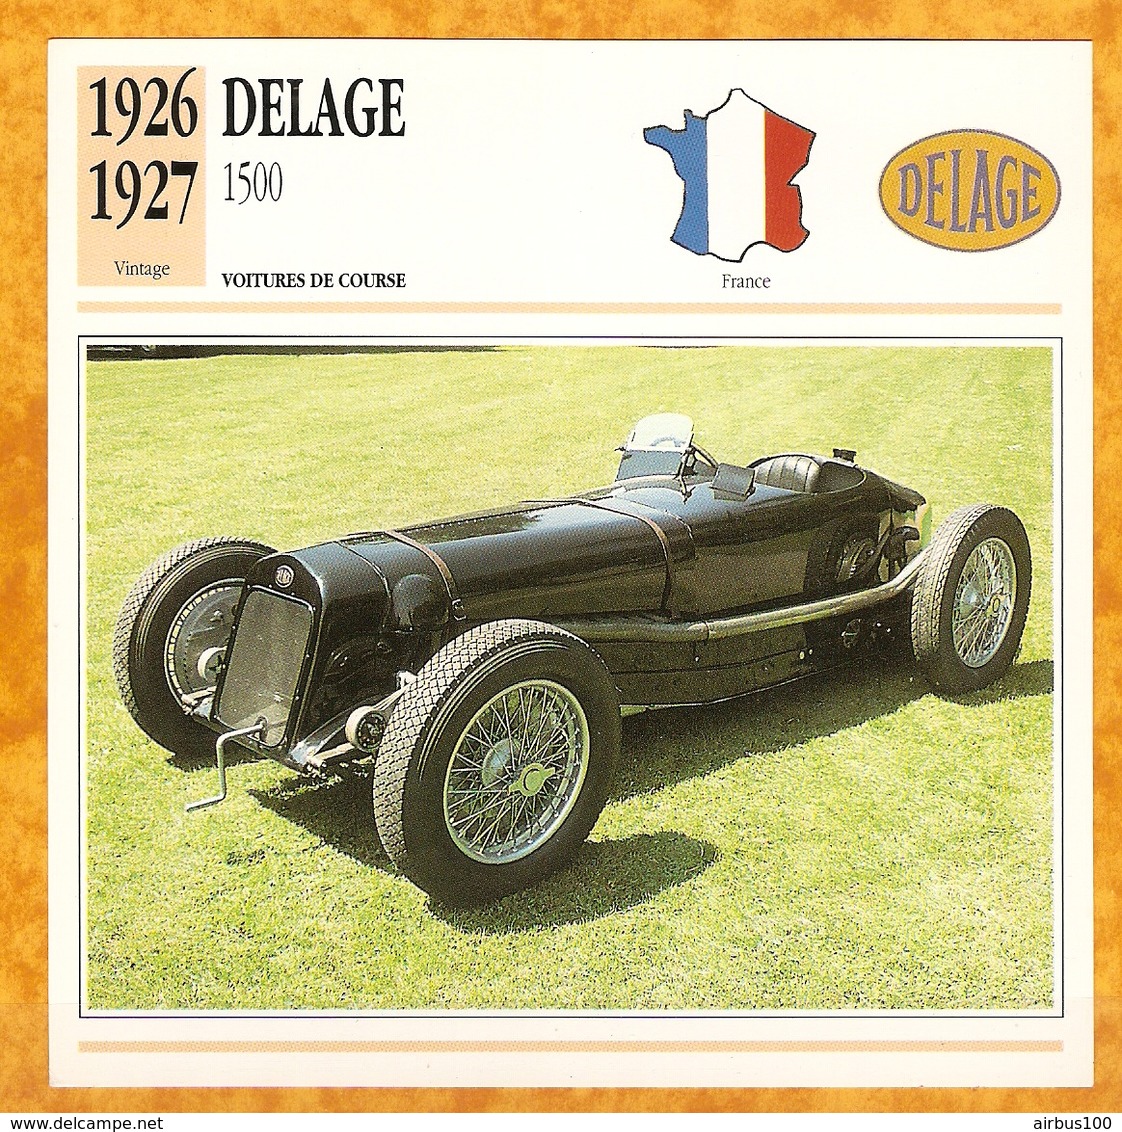 1926 FRANCE VIEILLE VOITURE DELAGE 1500 - FRANCE OLD CAR - FRANCIA VIEJO COCHE - VECCHIA MACCHINA - Cars